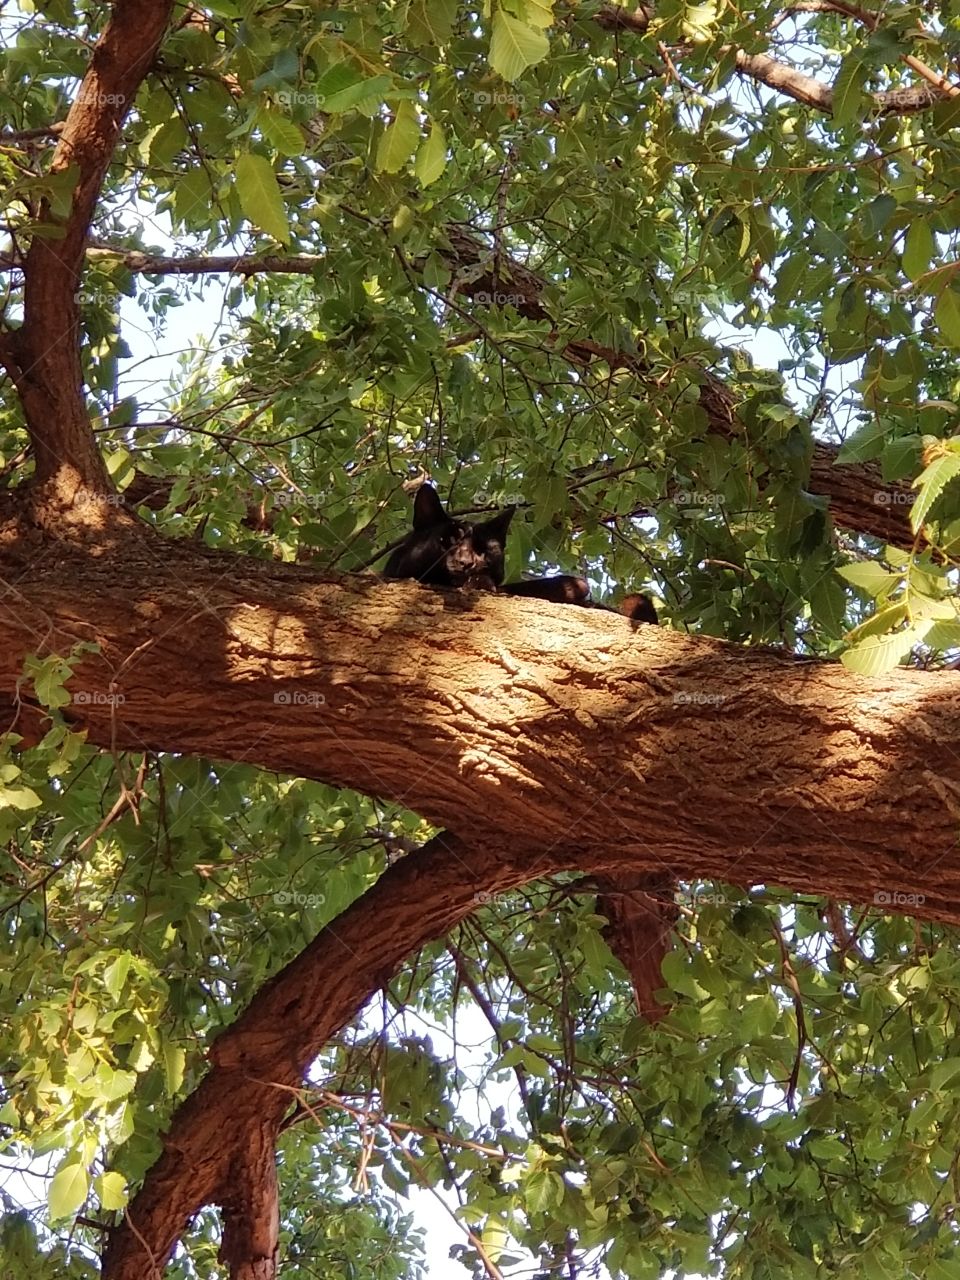 my cat sleeping in the tree